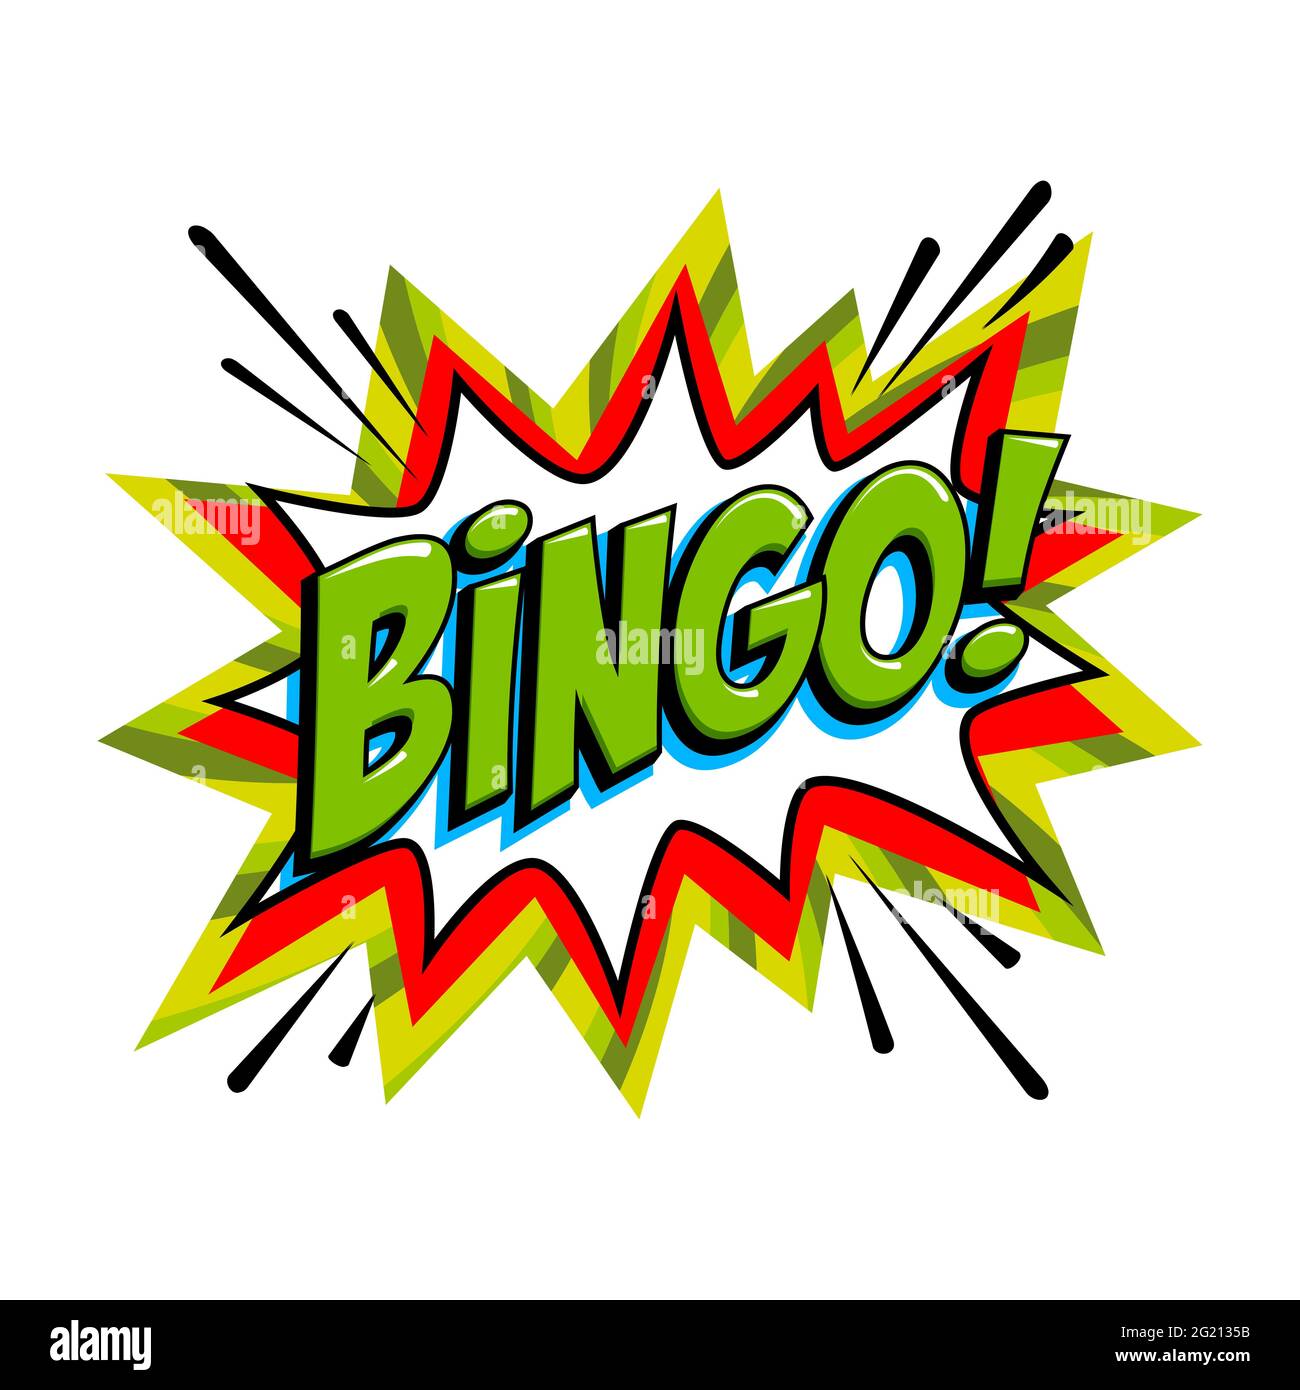 Bingo - Lotterie grünen Vektor-Banner. Lotterie-Spiel Hintergrund in Comic-Pop-Art-Stil. Cartoon-Vektorgrafik. Stock Vektor